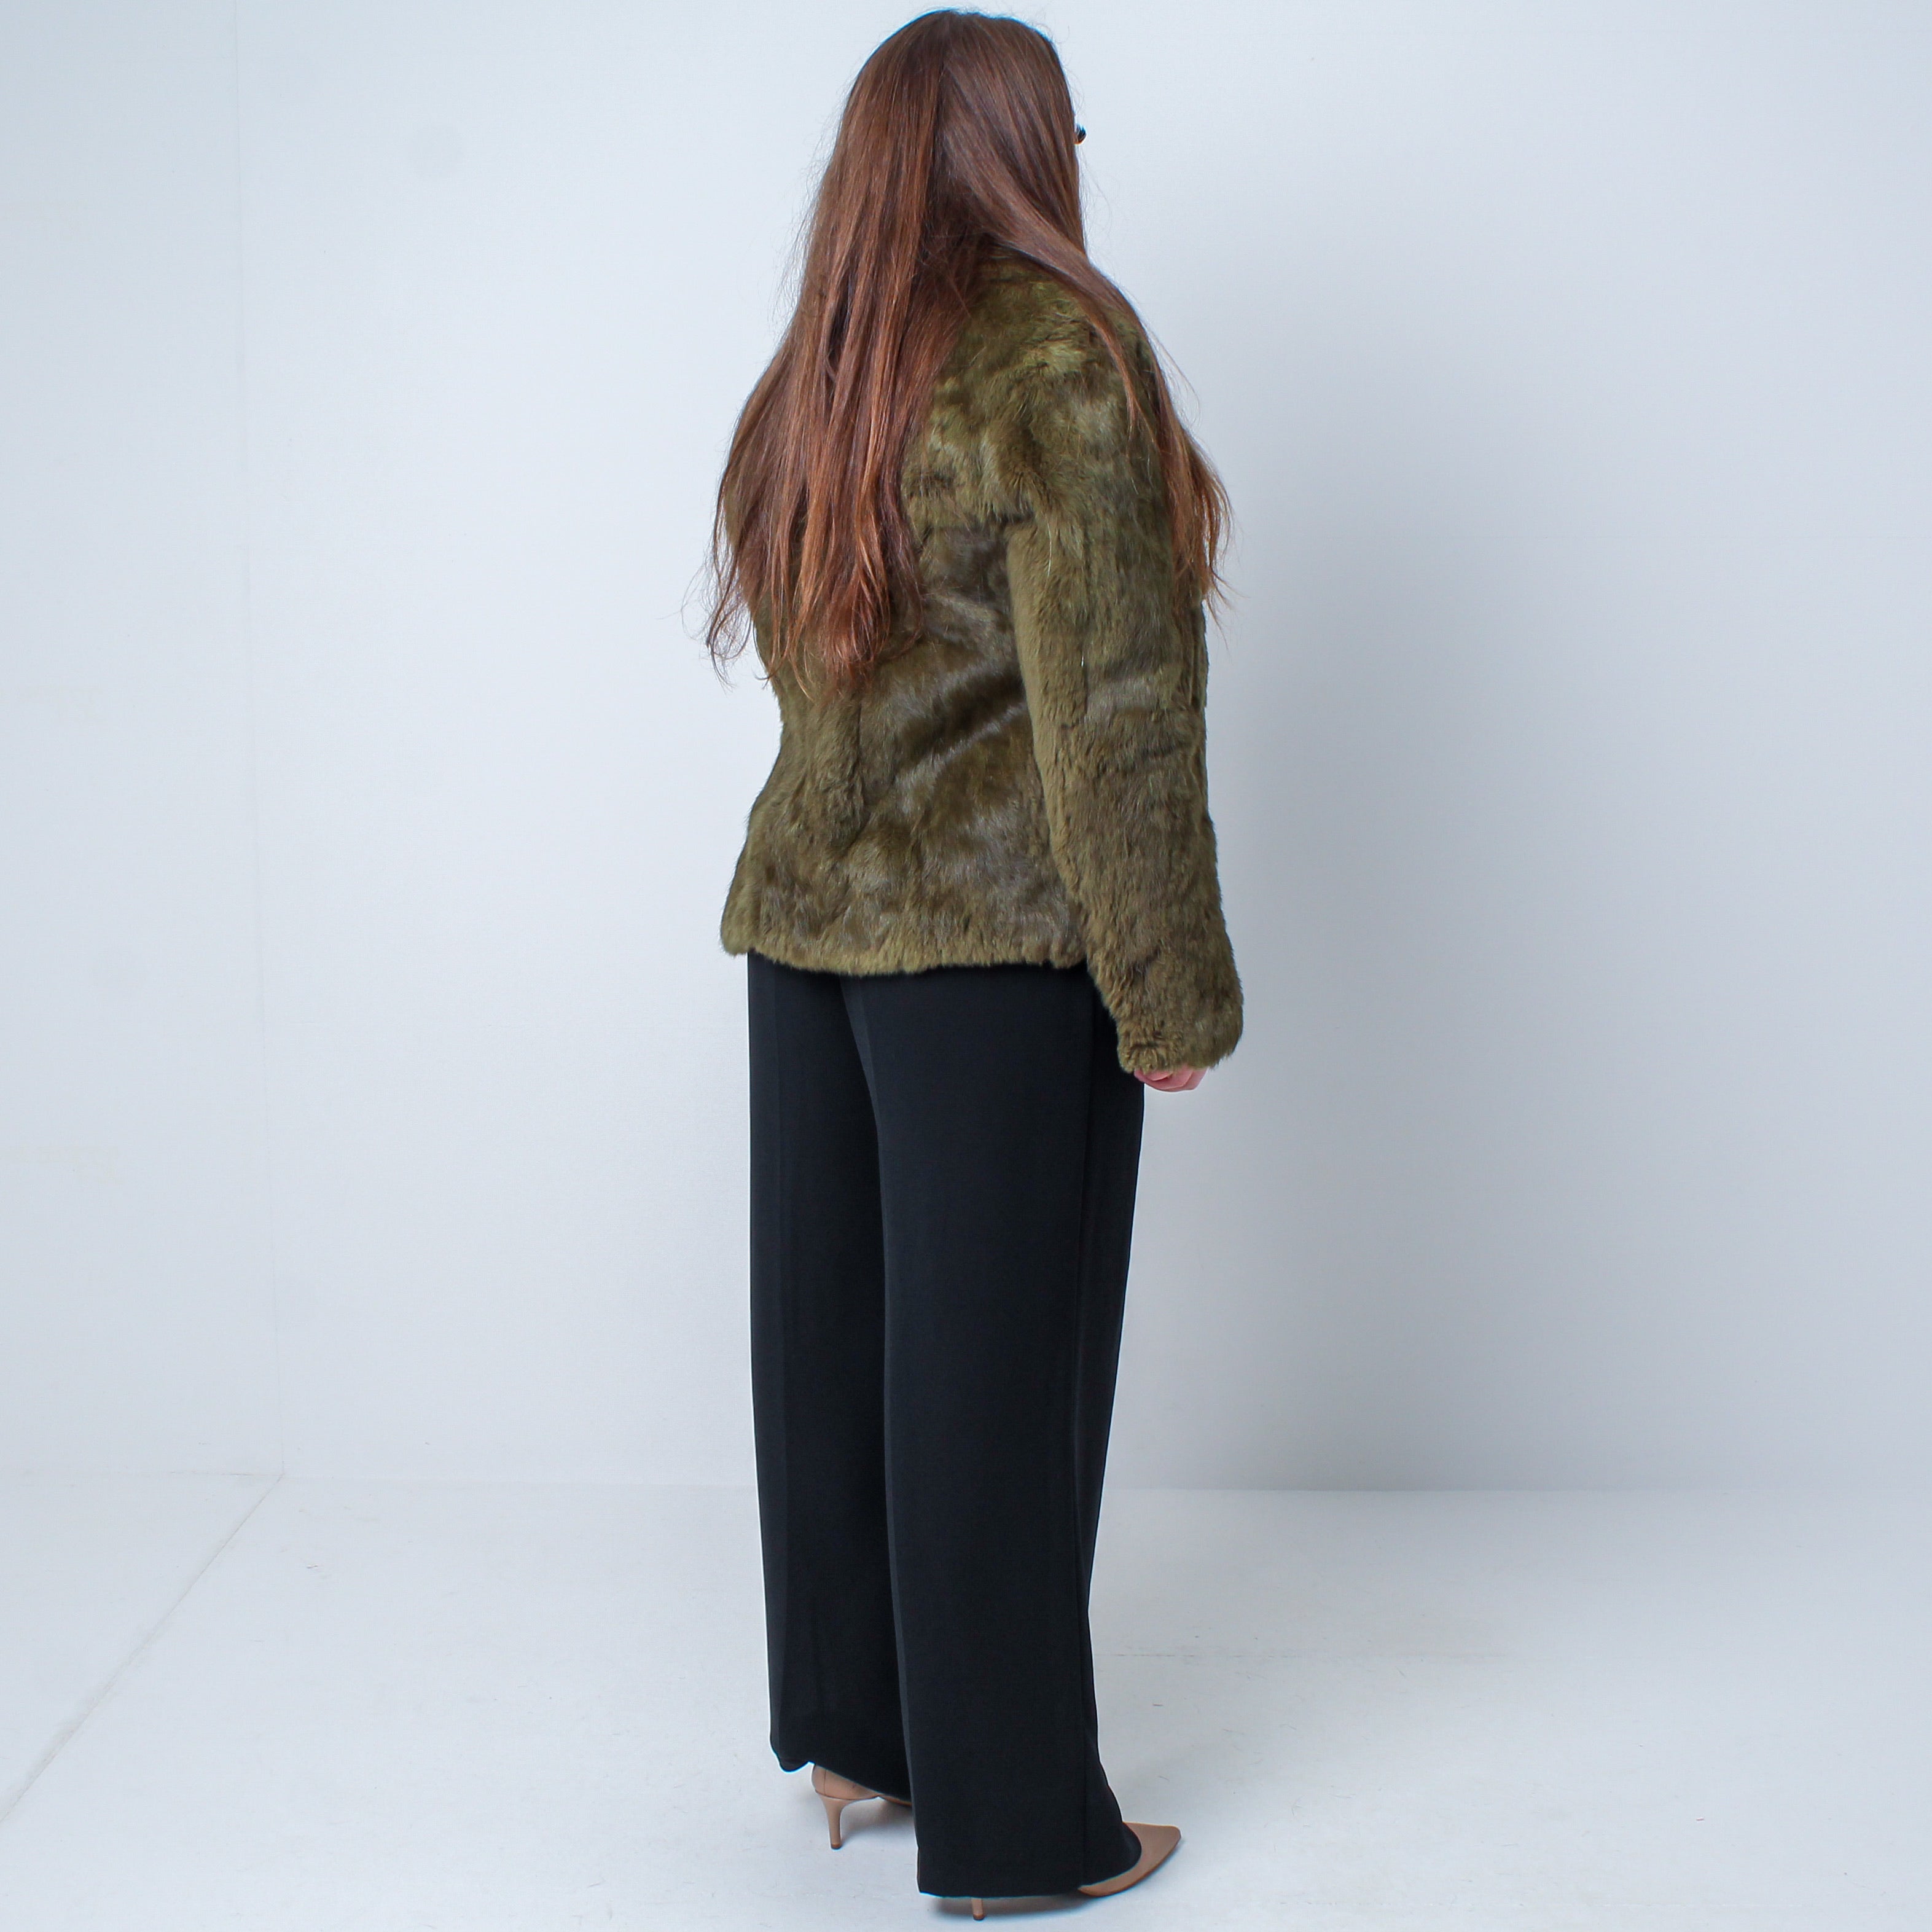 Women’s Vintage Real Green Natural Rabbit Fur Coat Size: Medium-Large UK 10-14